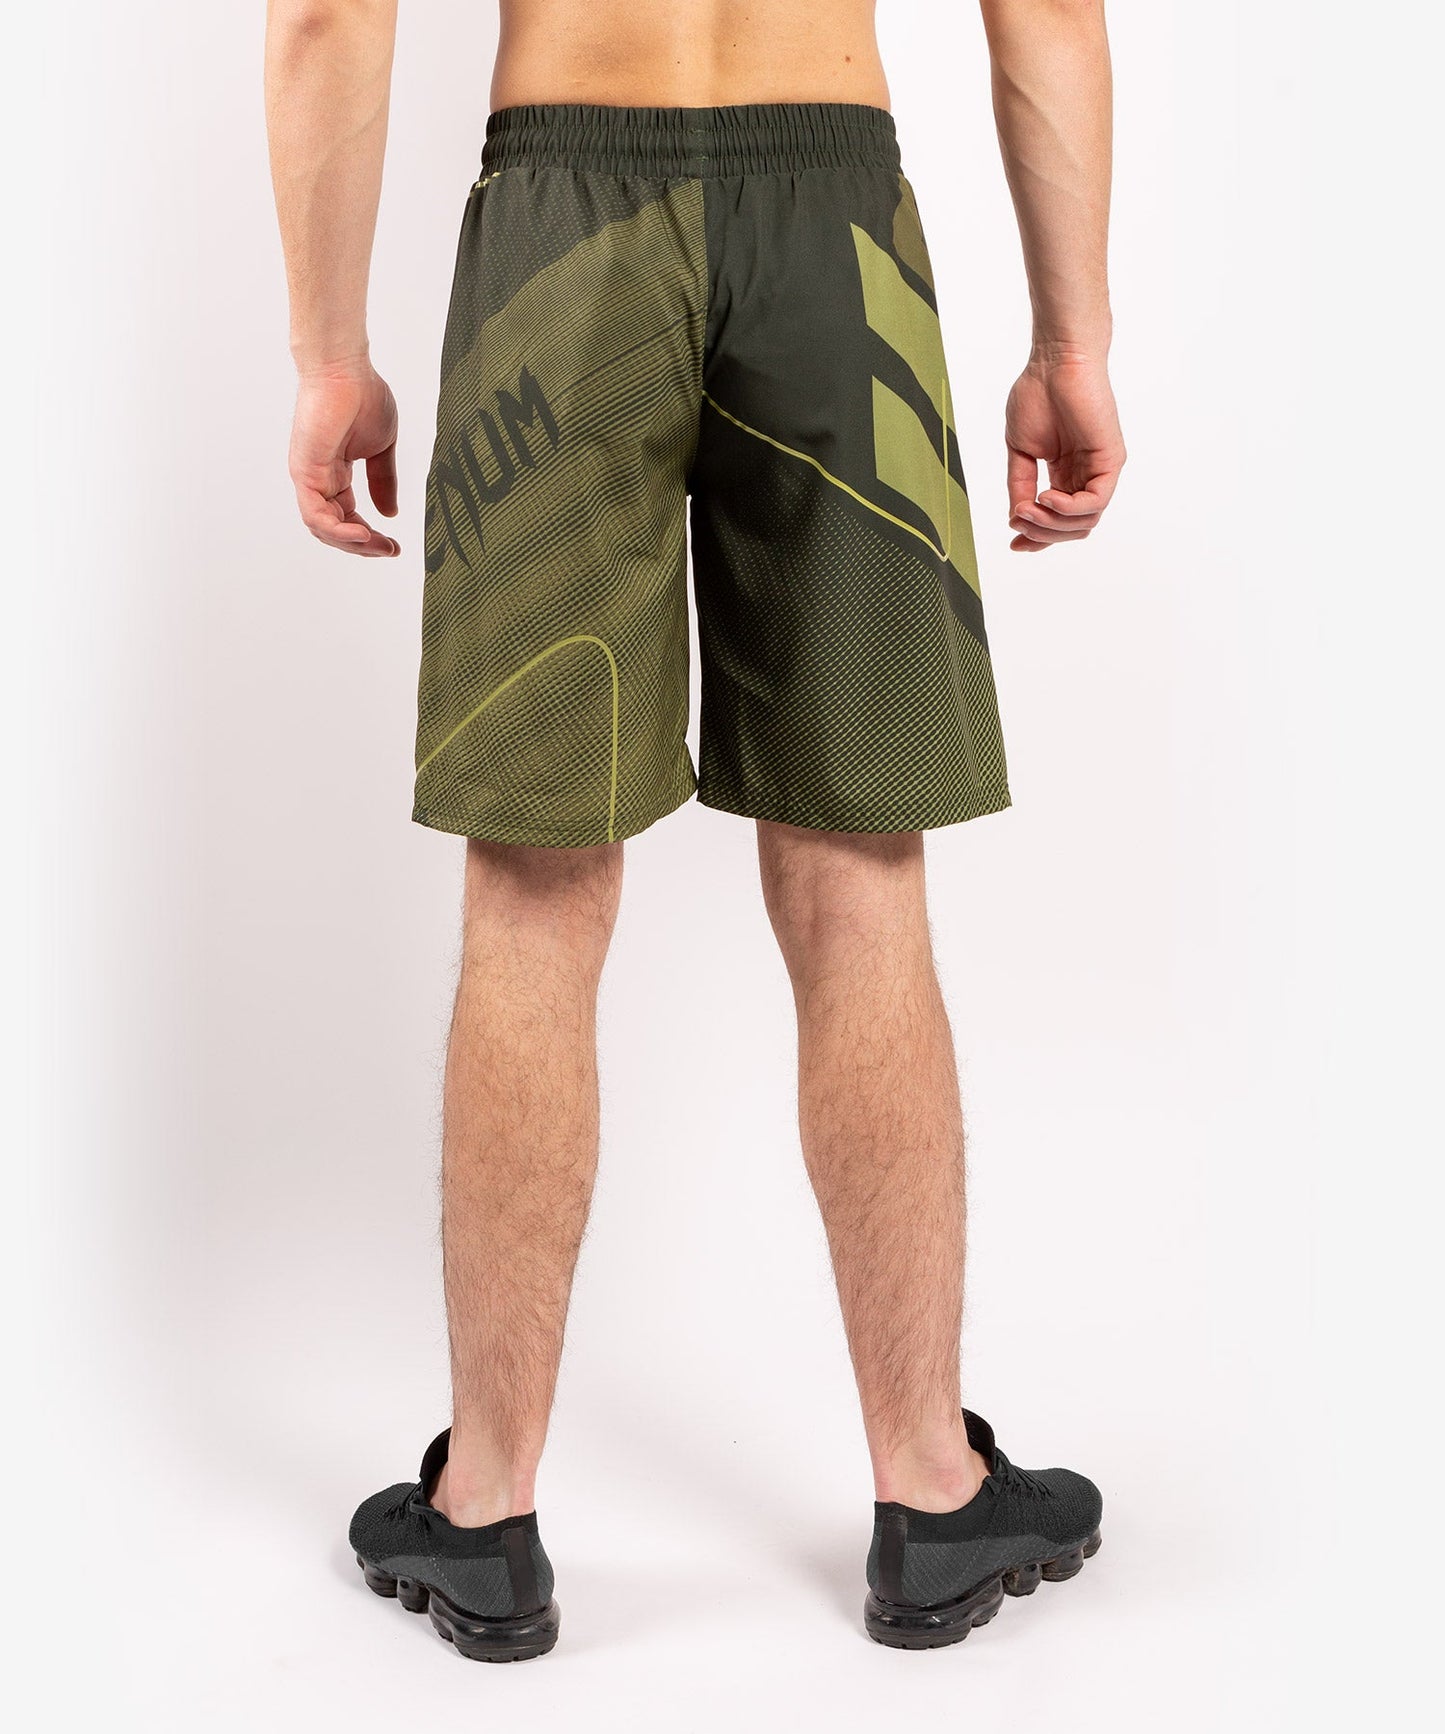 Venum Loma Commando Training Shorts - Khaki